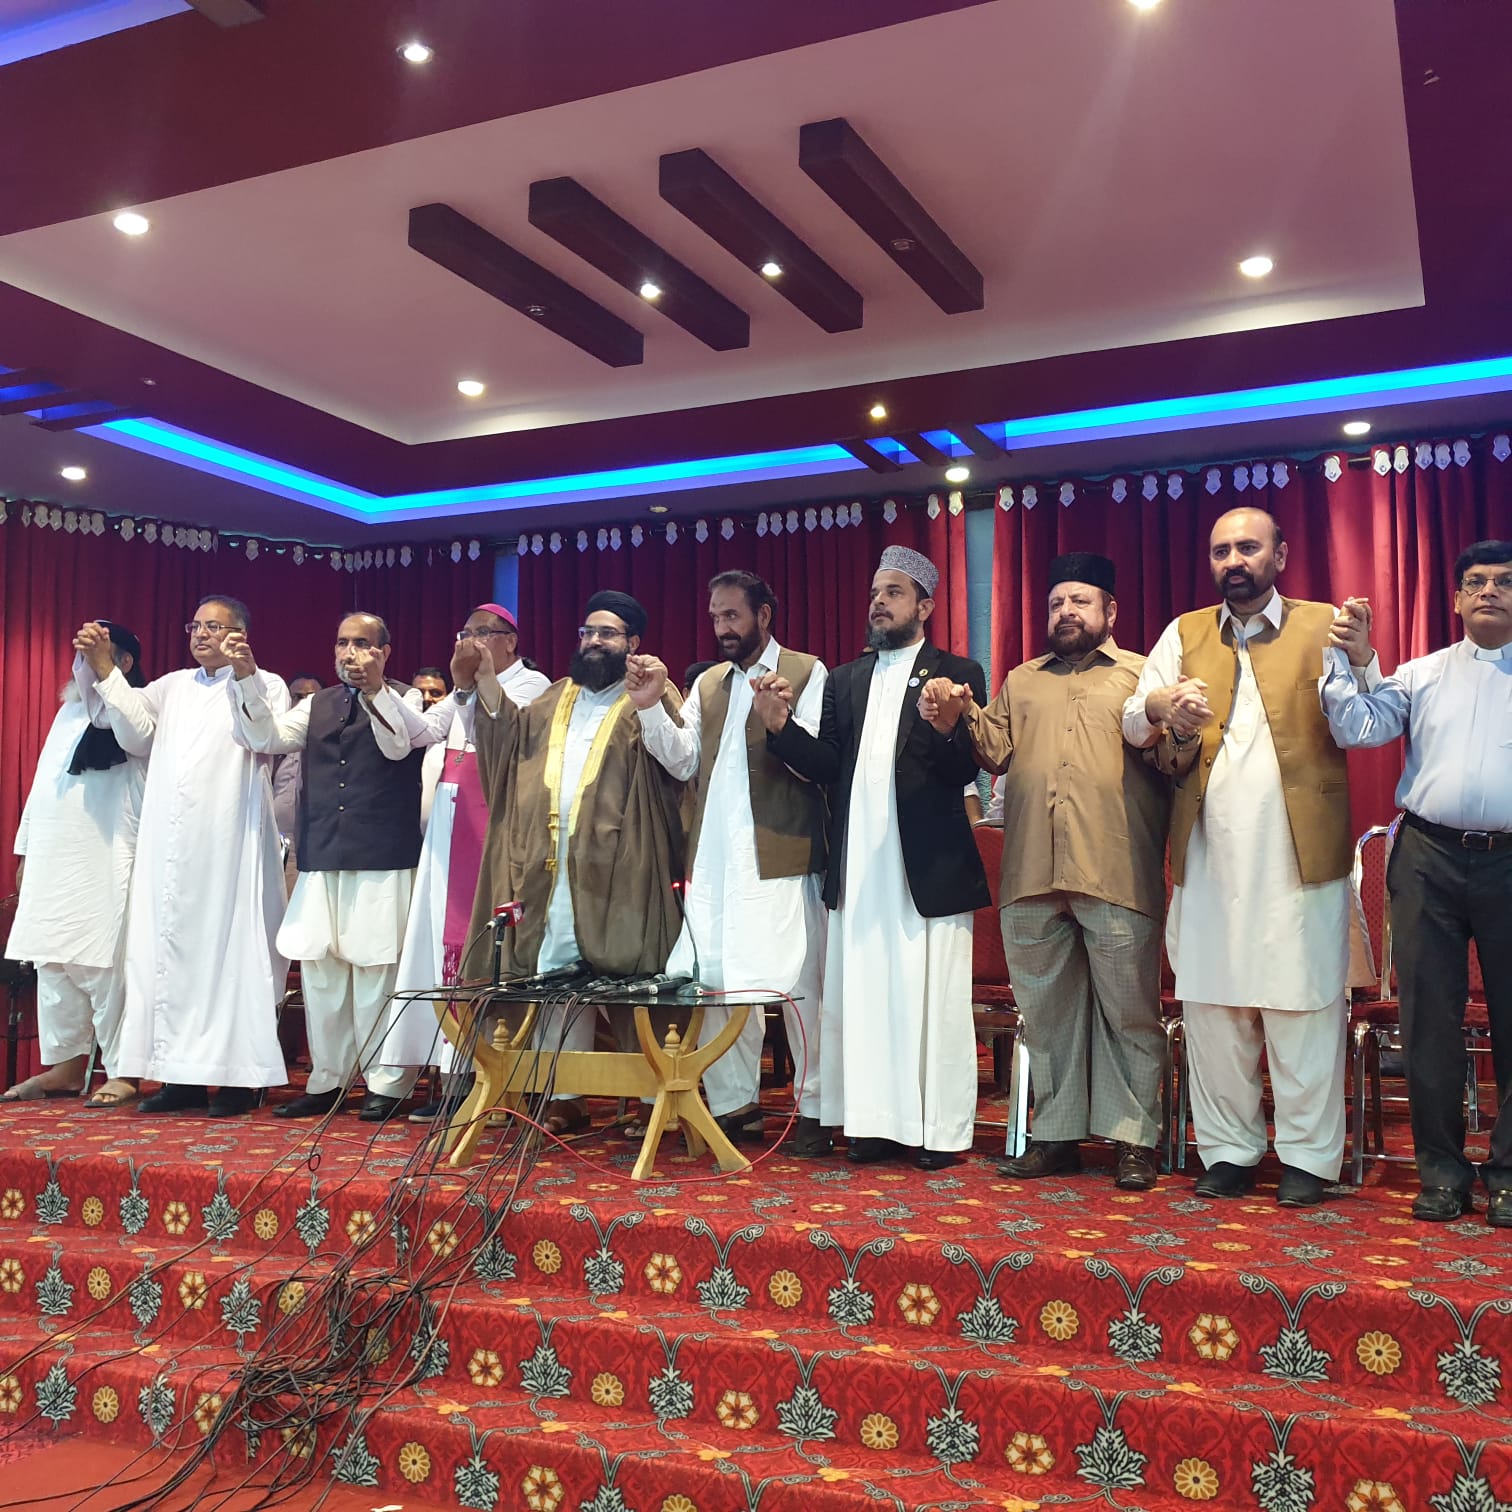 Jaranwala tragedy: Religious scholars, political leaders unite in Islamabad Declaration to promote harmony